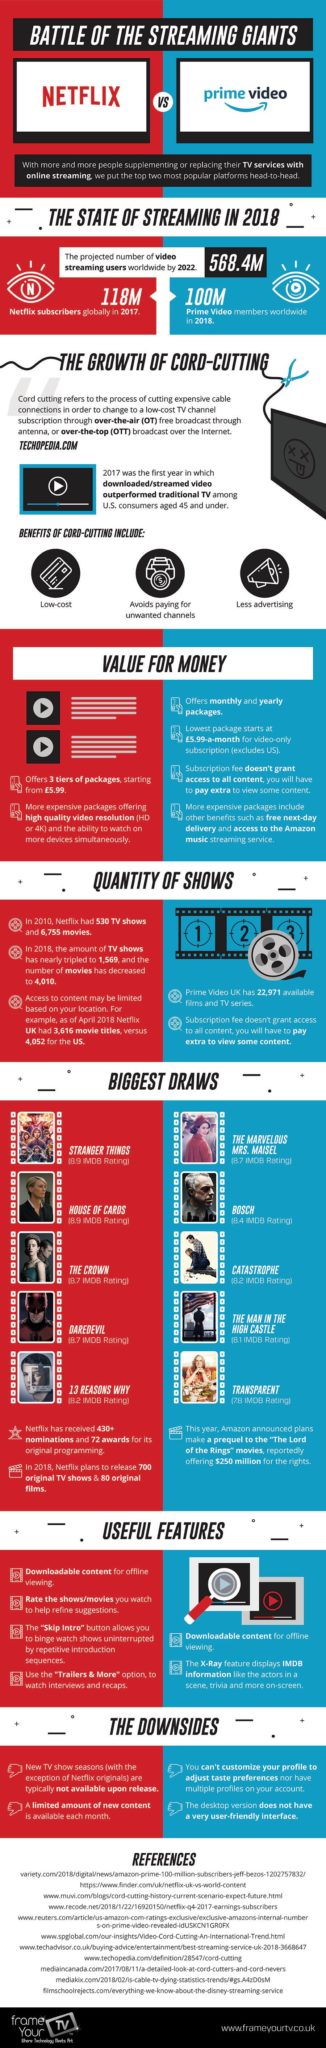 Battle-of-the-Streaming-Giants-Netflix-vs-Amazon-Prime